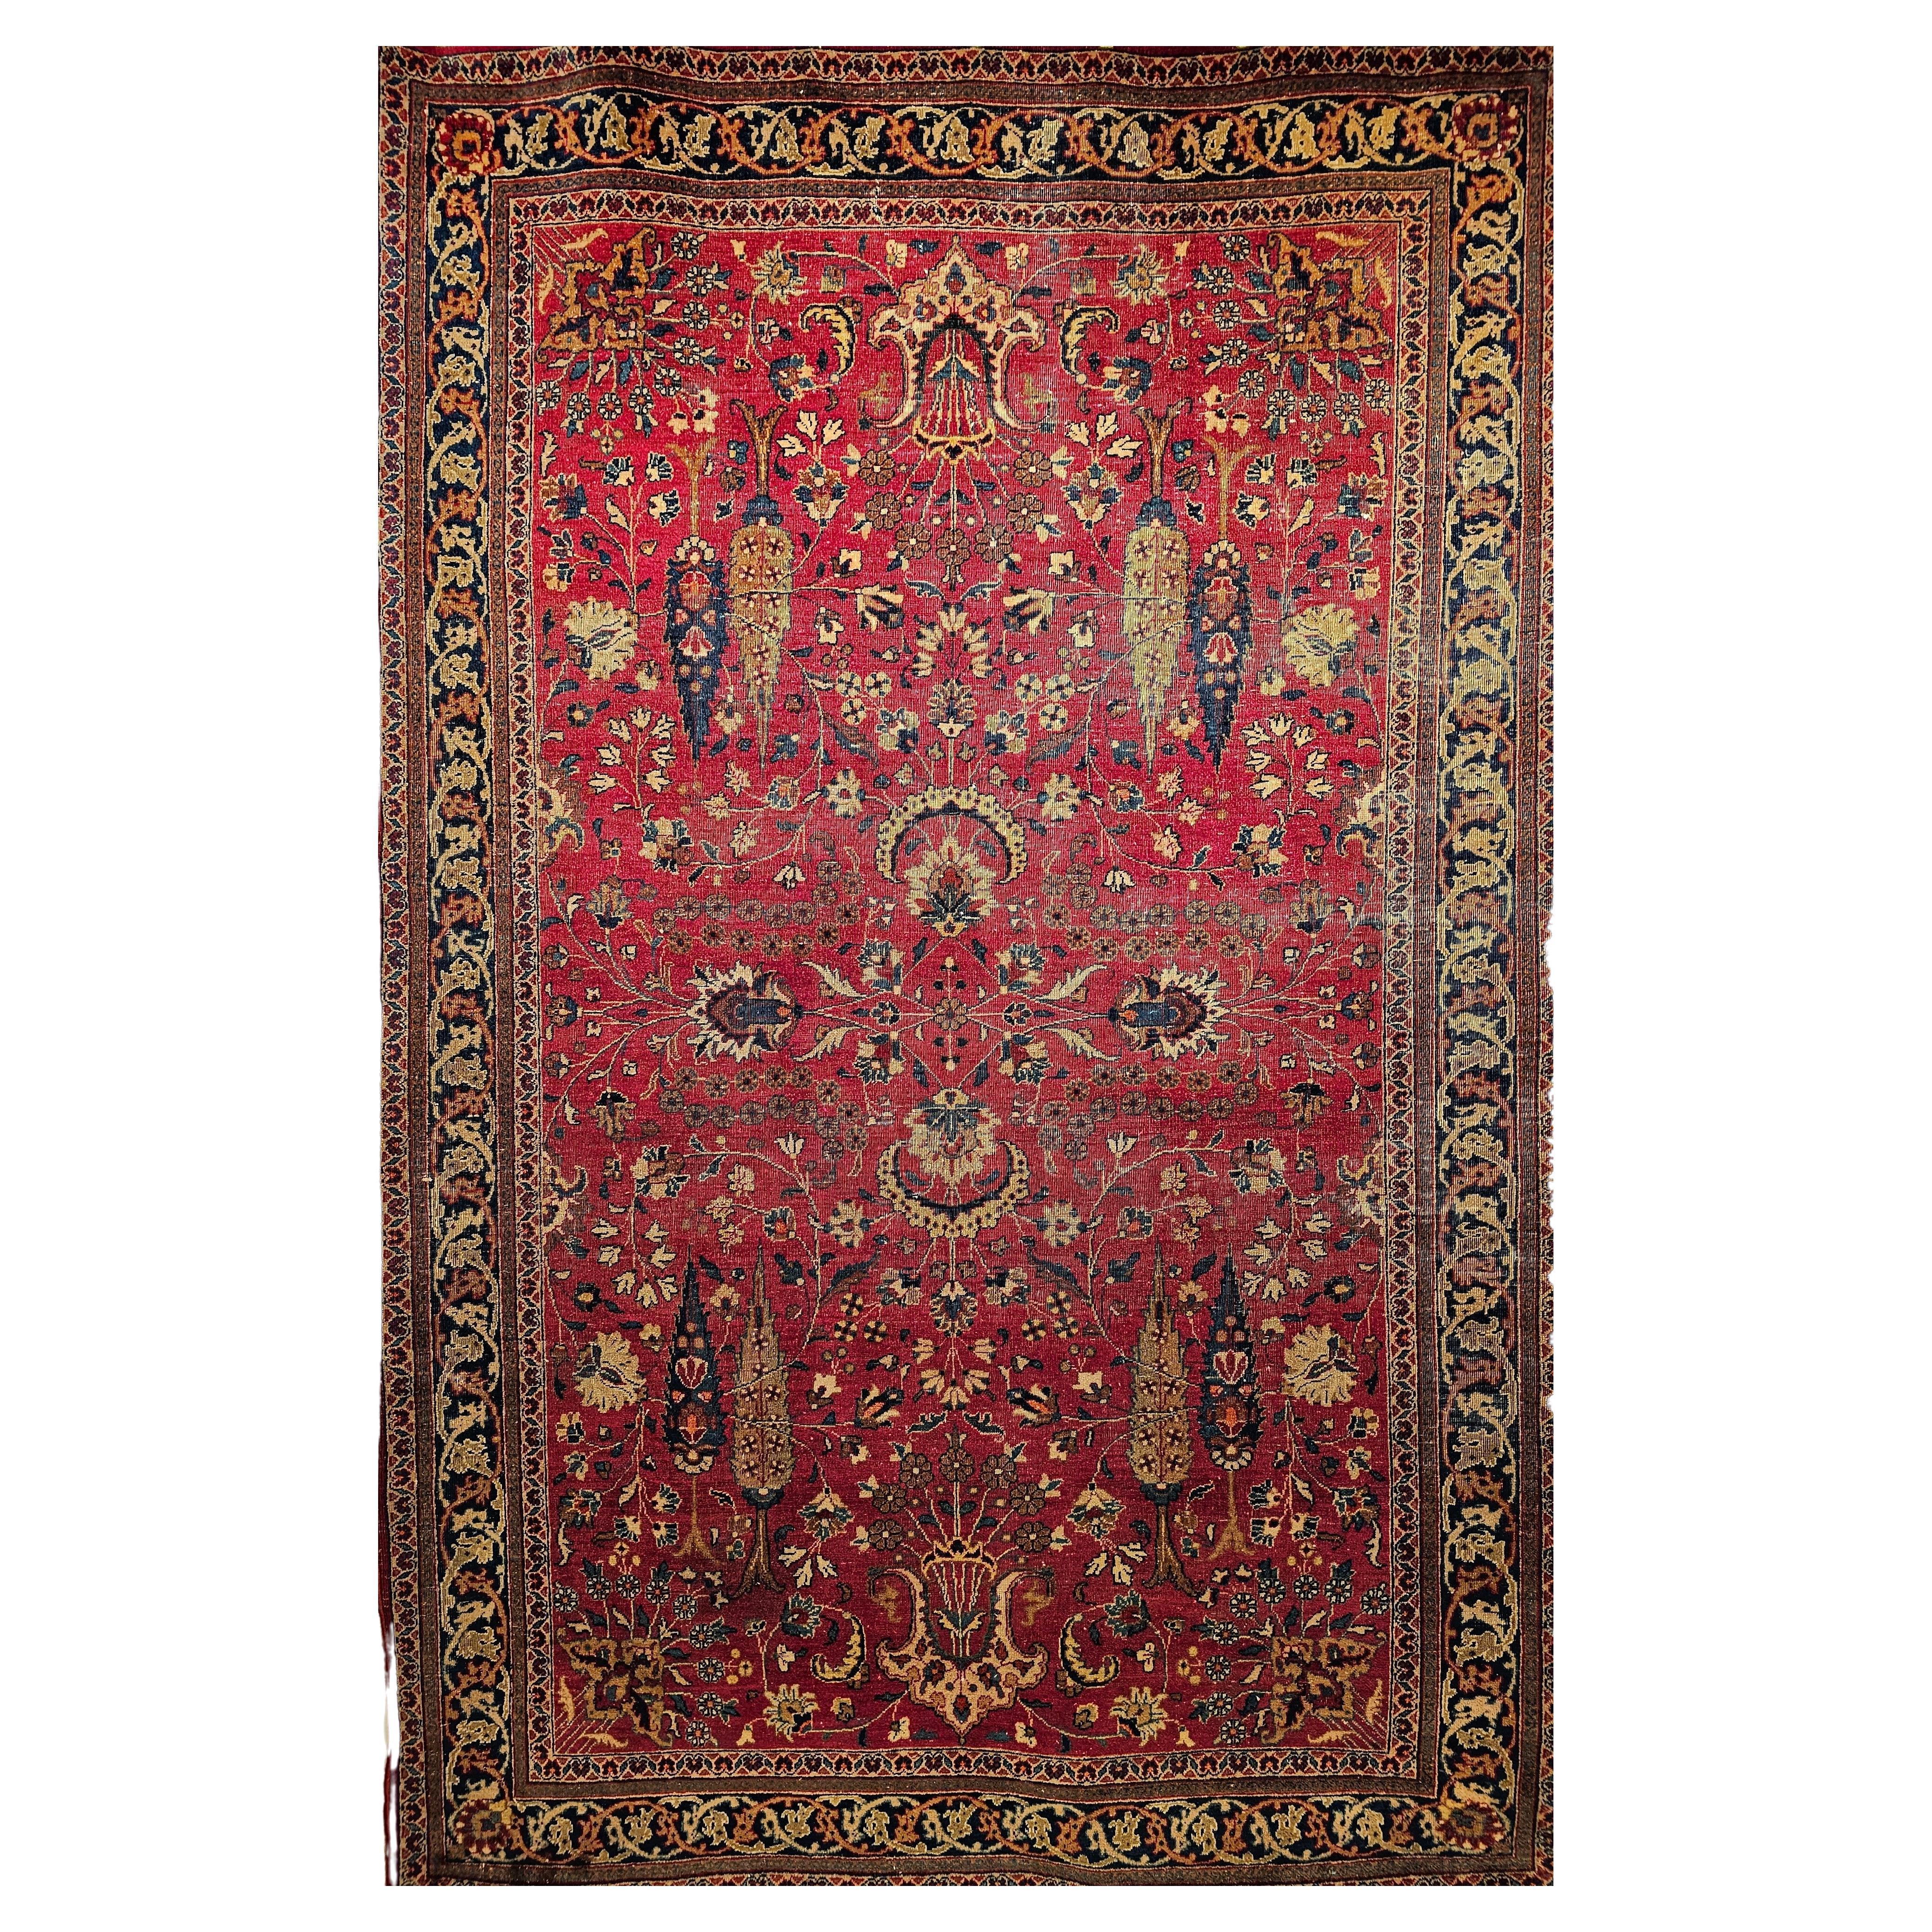 19th Century Persian Khorassan in Allover Floral Design in Crimson Red, Blue For Sale